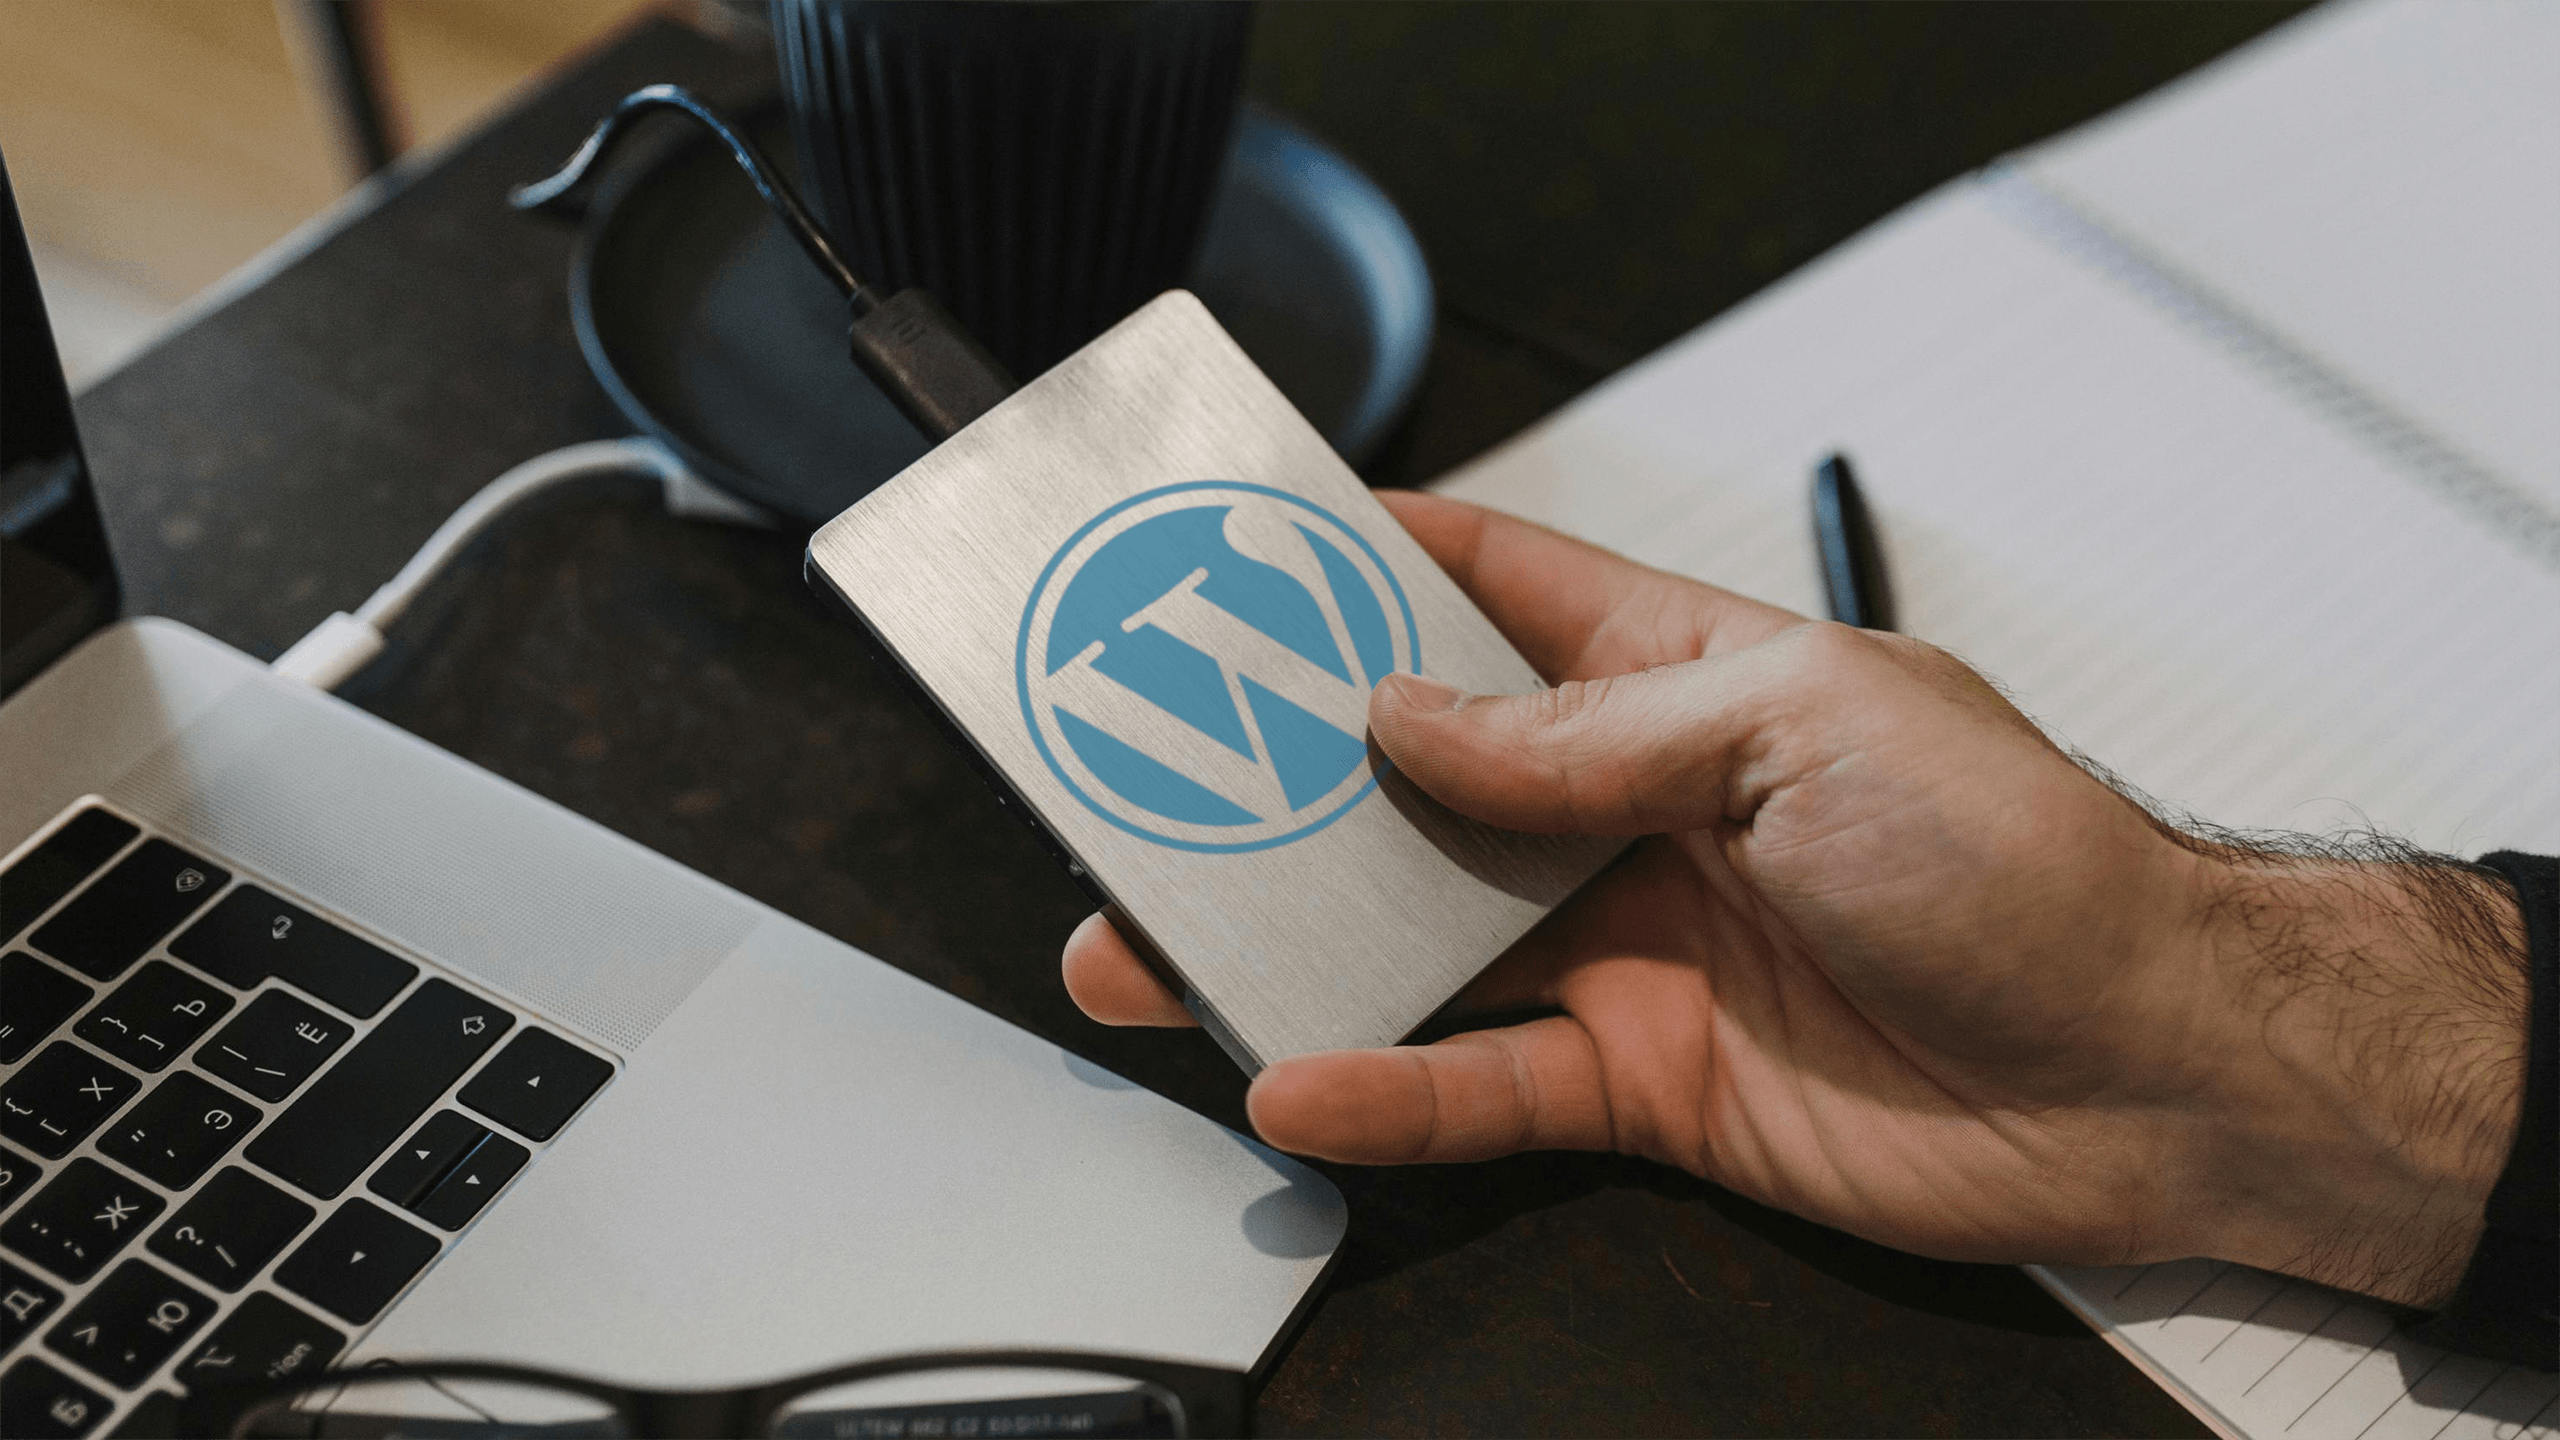 Man holding a hard drive with a WordPress logo